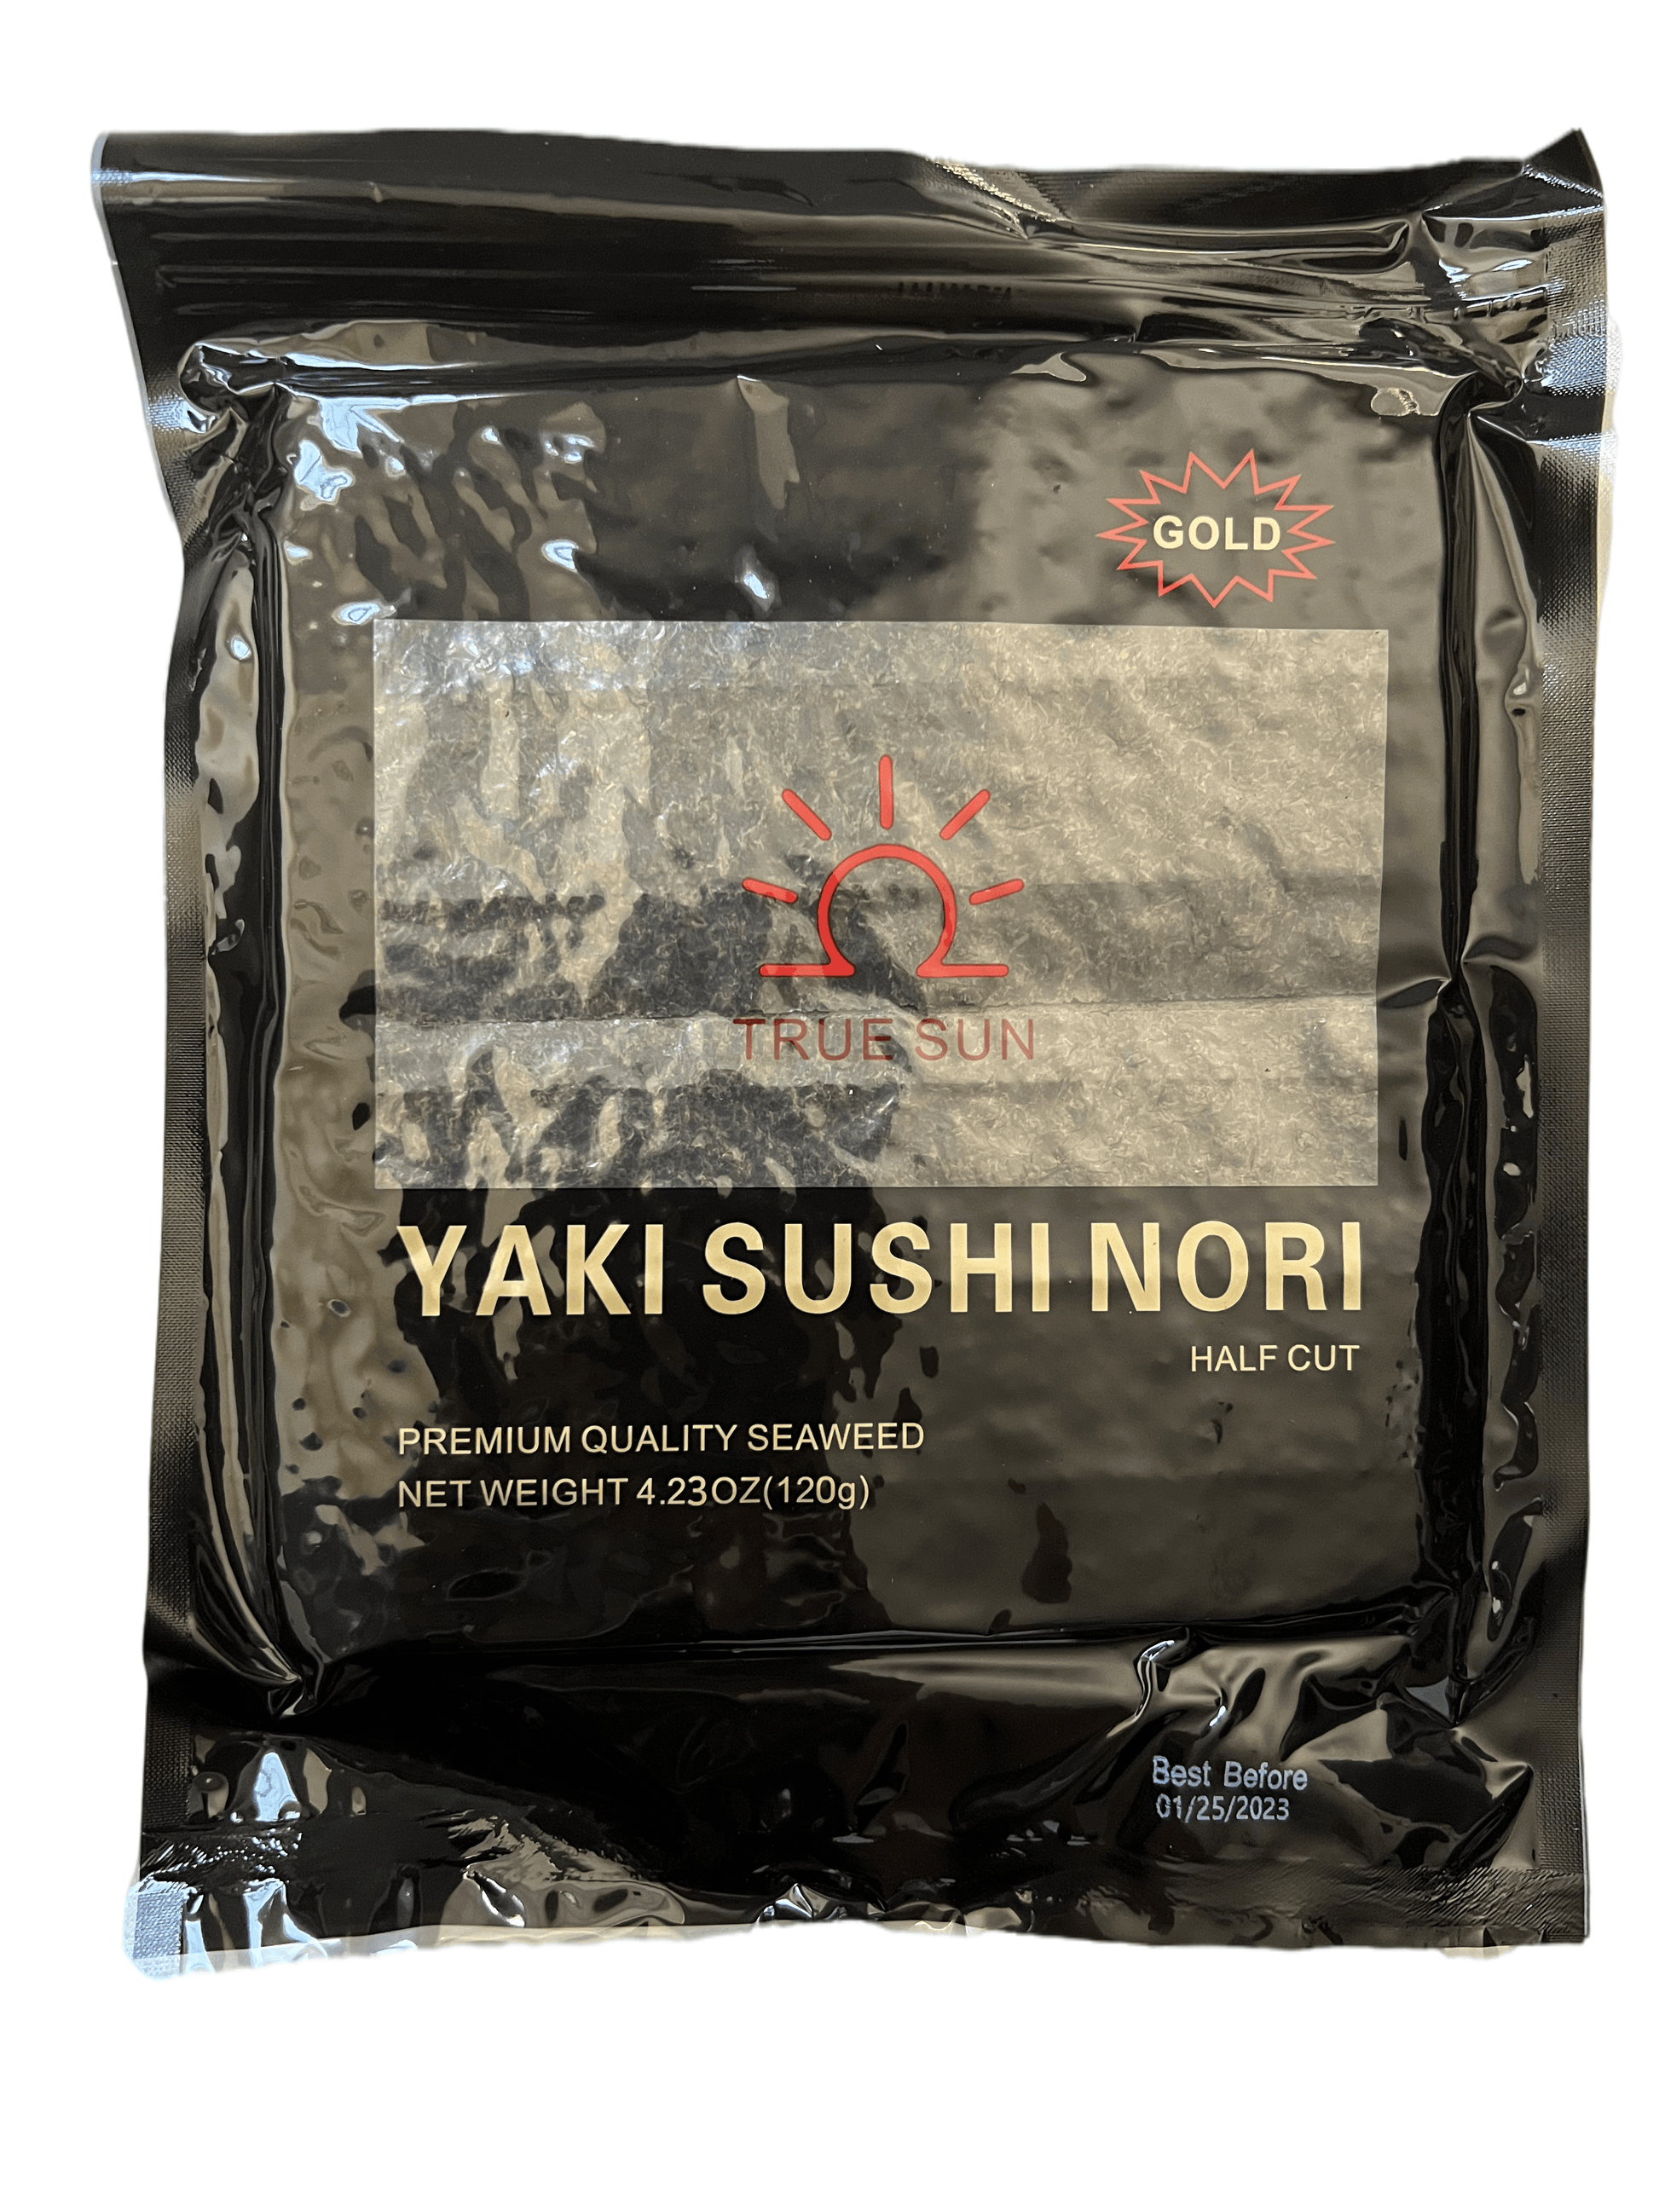 Buy 7 get 1 free True Sun Sushi Nori Special Black Gold , Half cut, 100 pieces/bag, 10 bags/box - True Sun